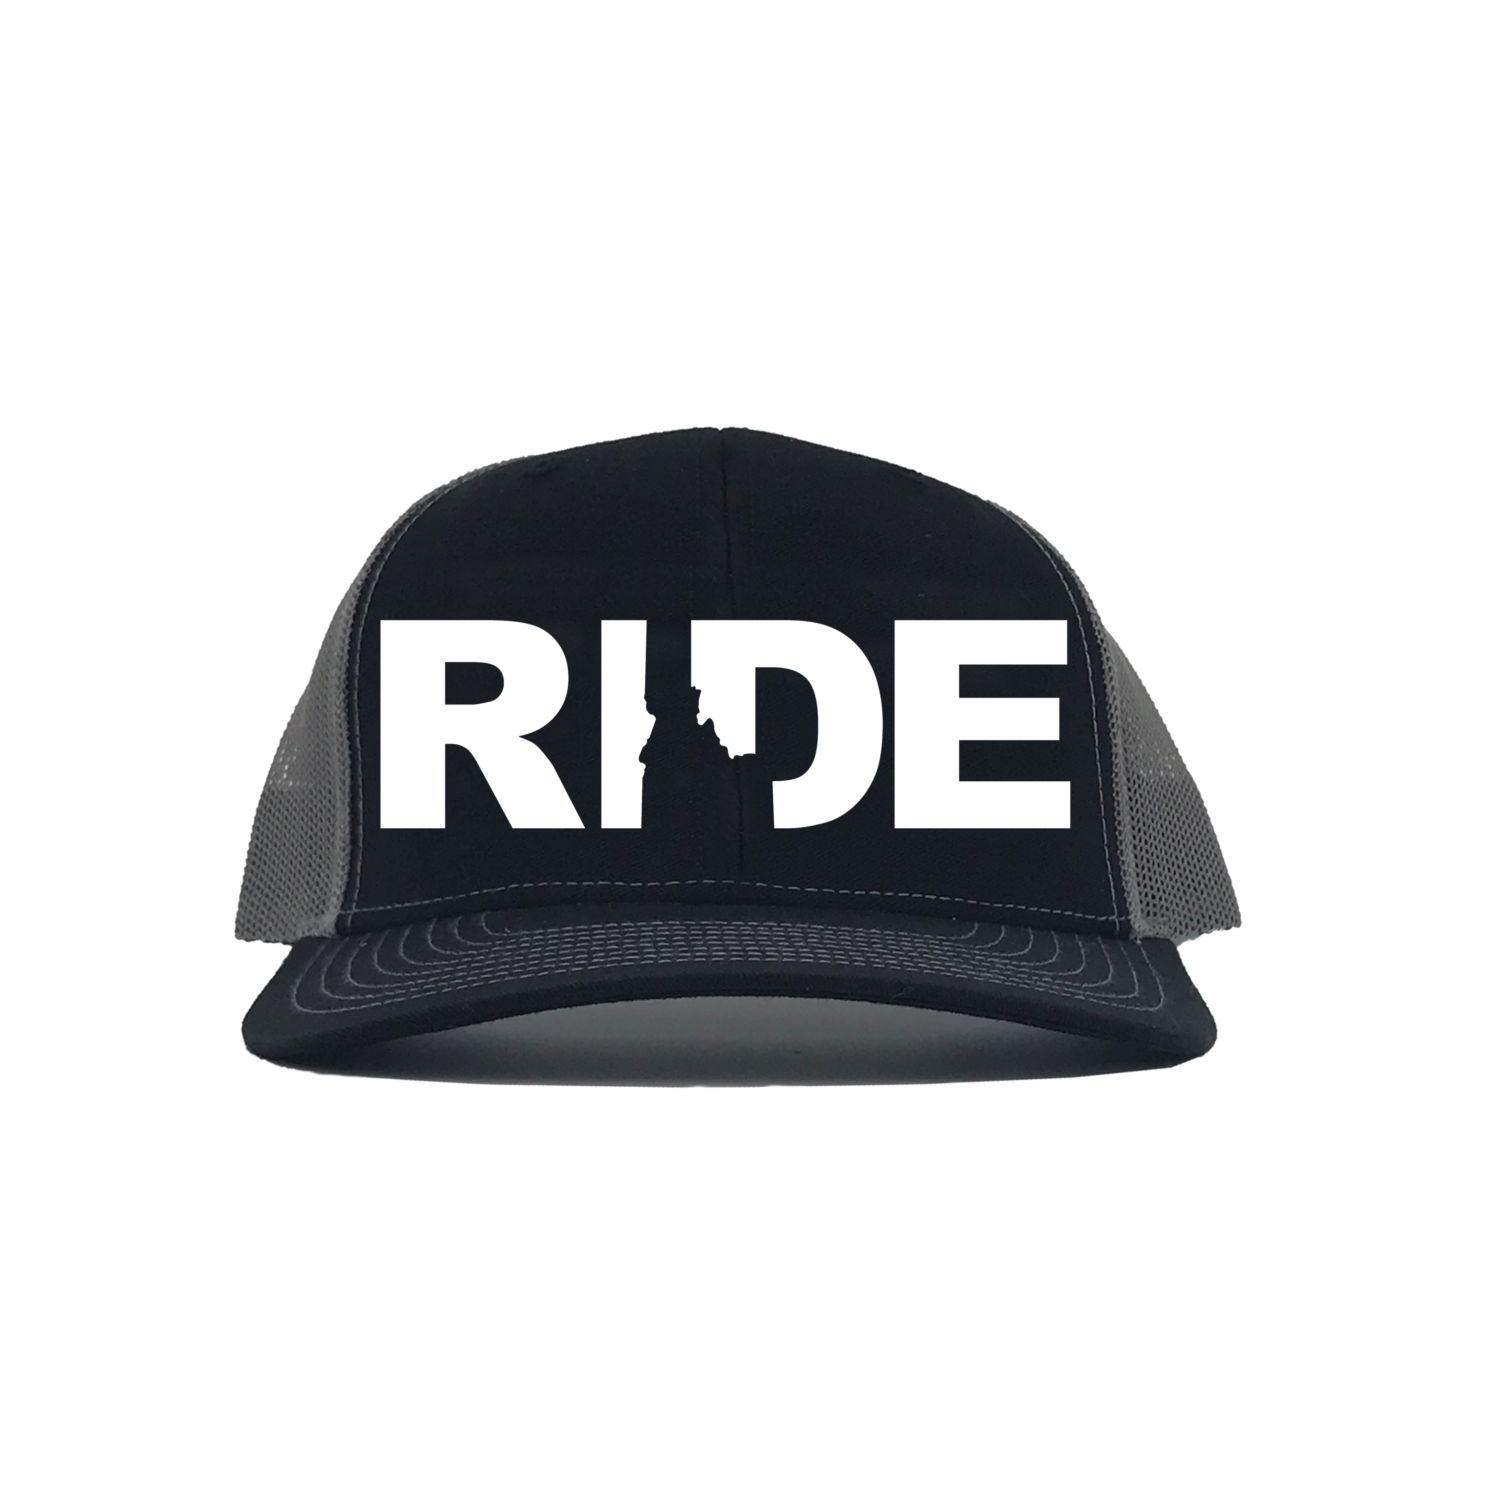 Ride Idaho Classic Embroidered Snapback Trucker Hat Black/Gray